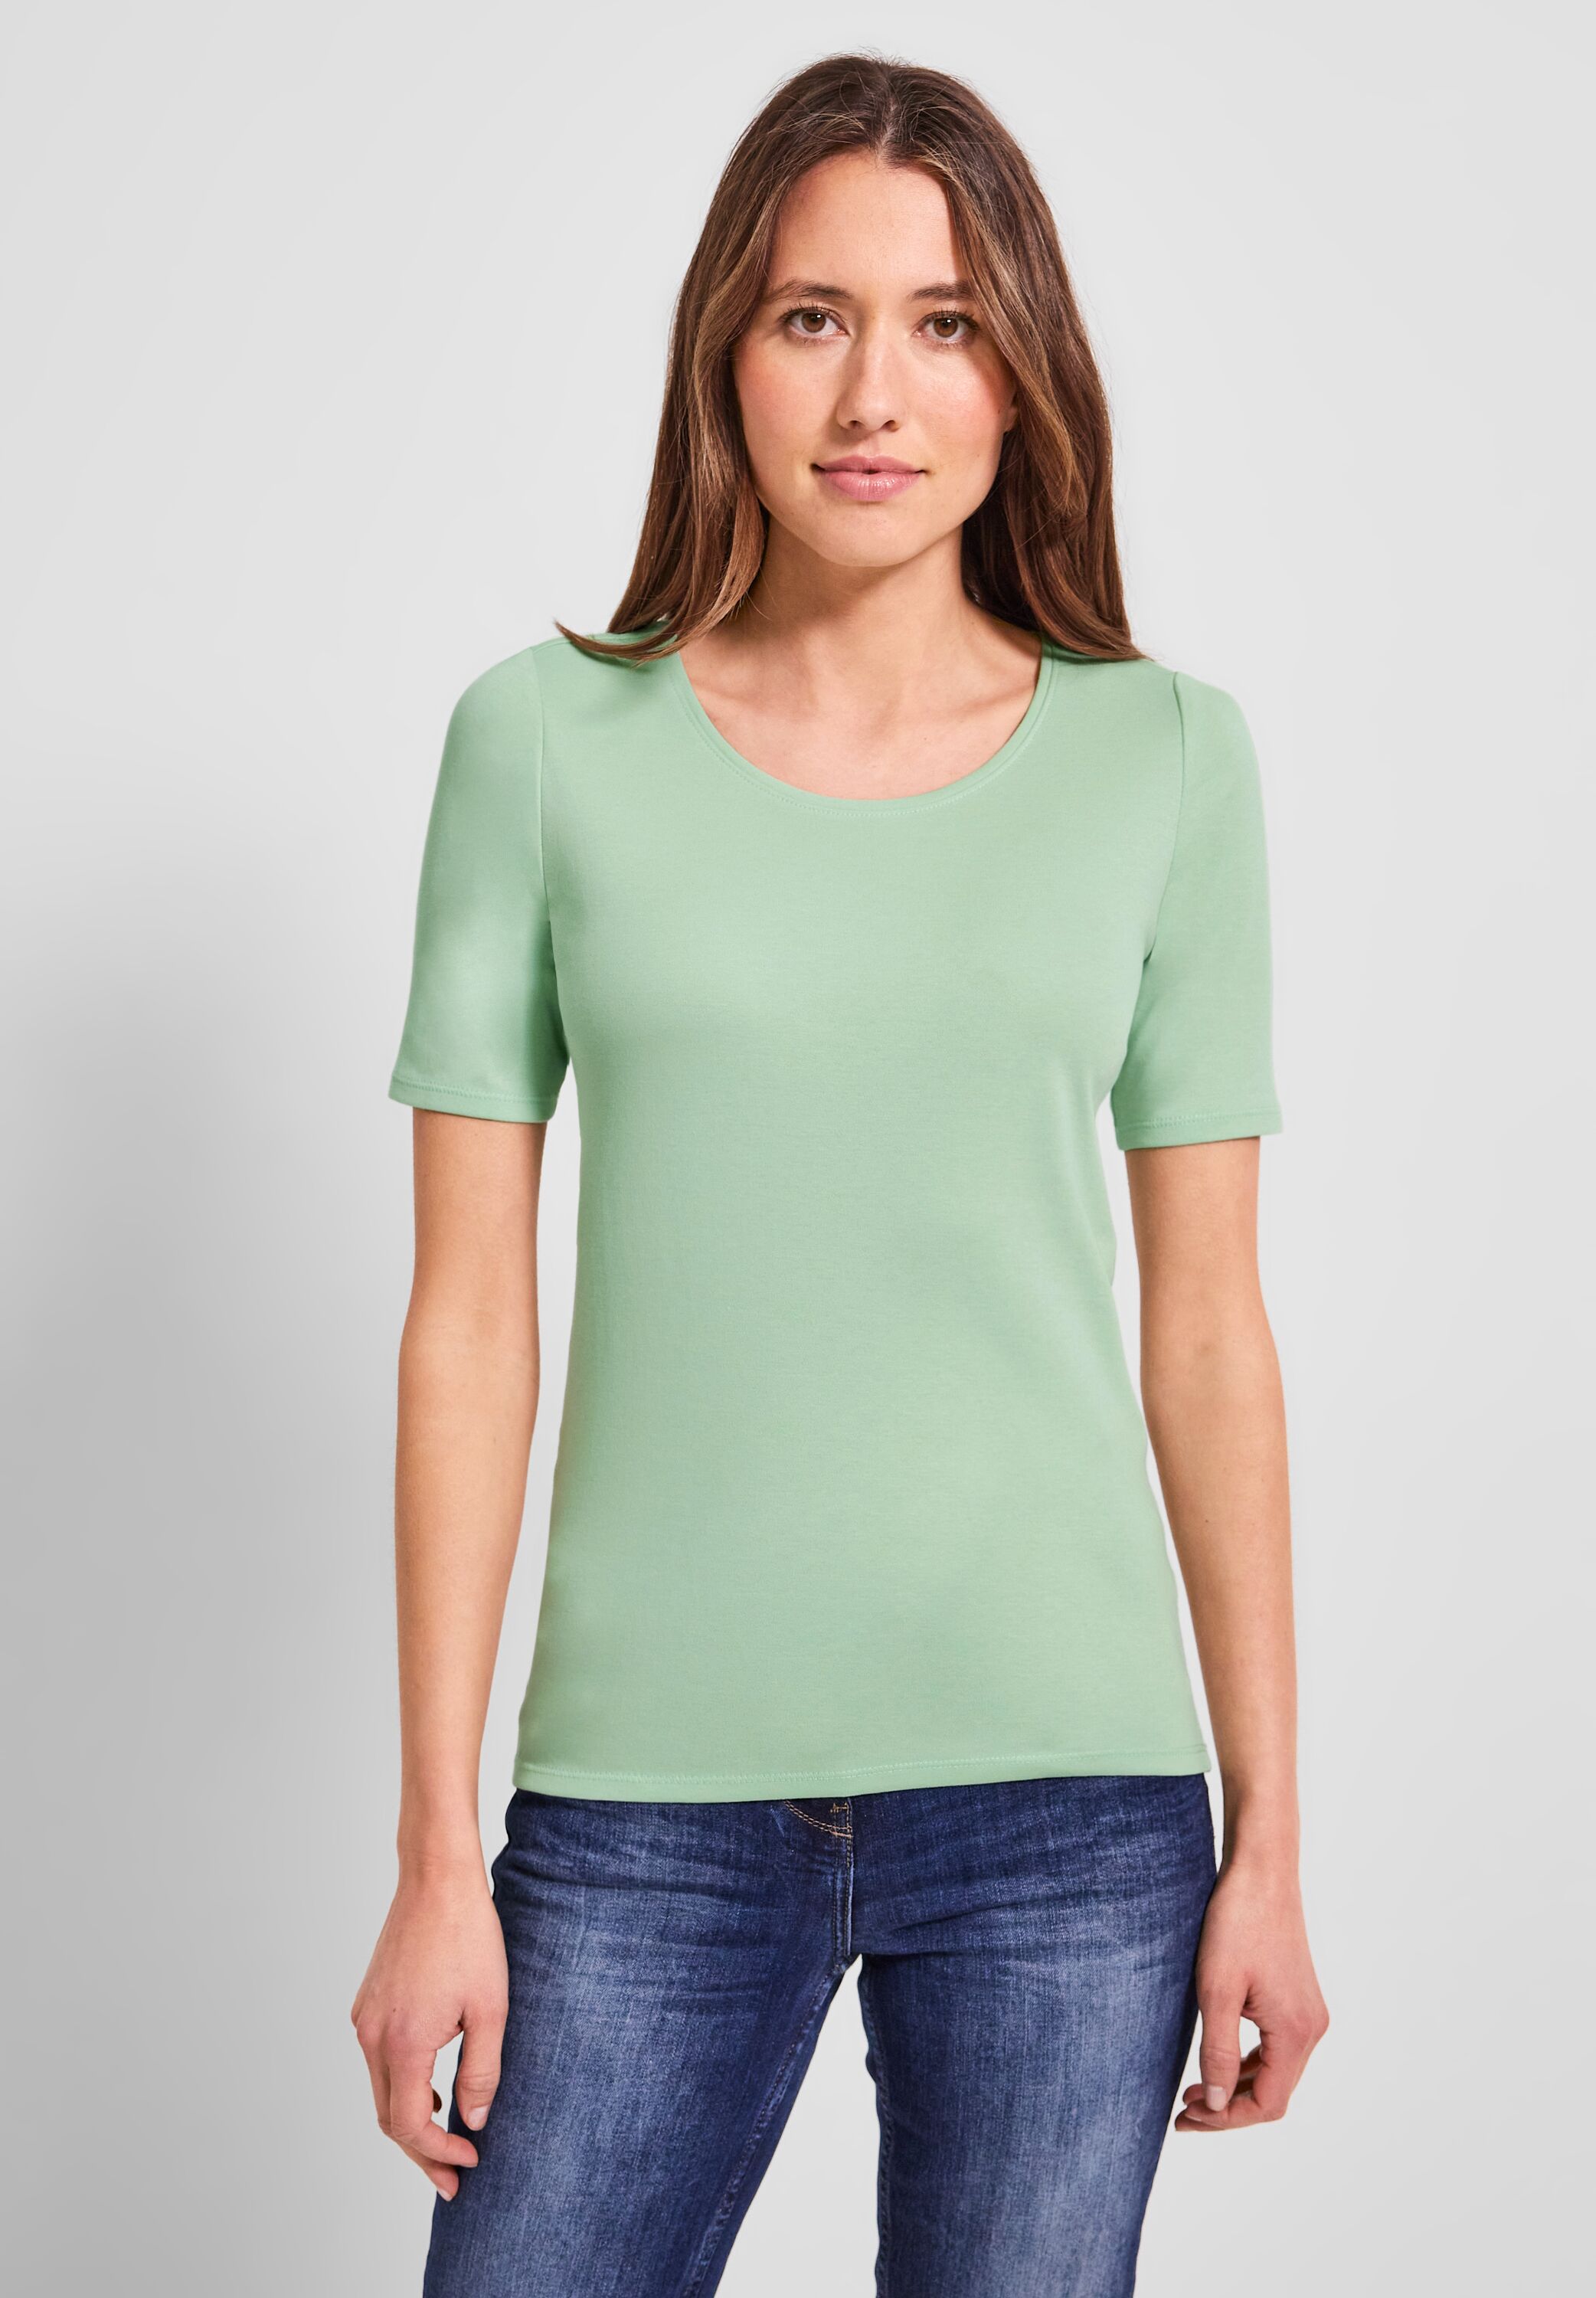 Fresh CONCEPT in Lena T-Shirt Green CECIL Mode - Salvia B317515-14851